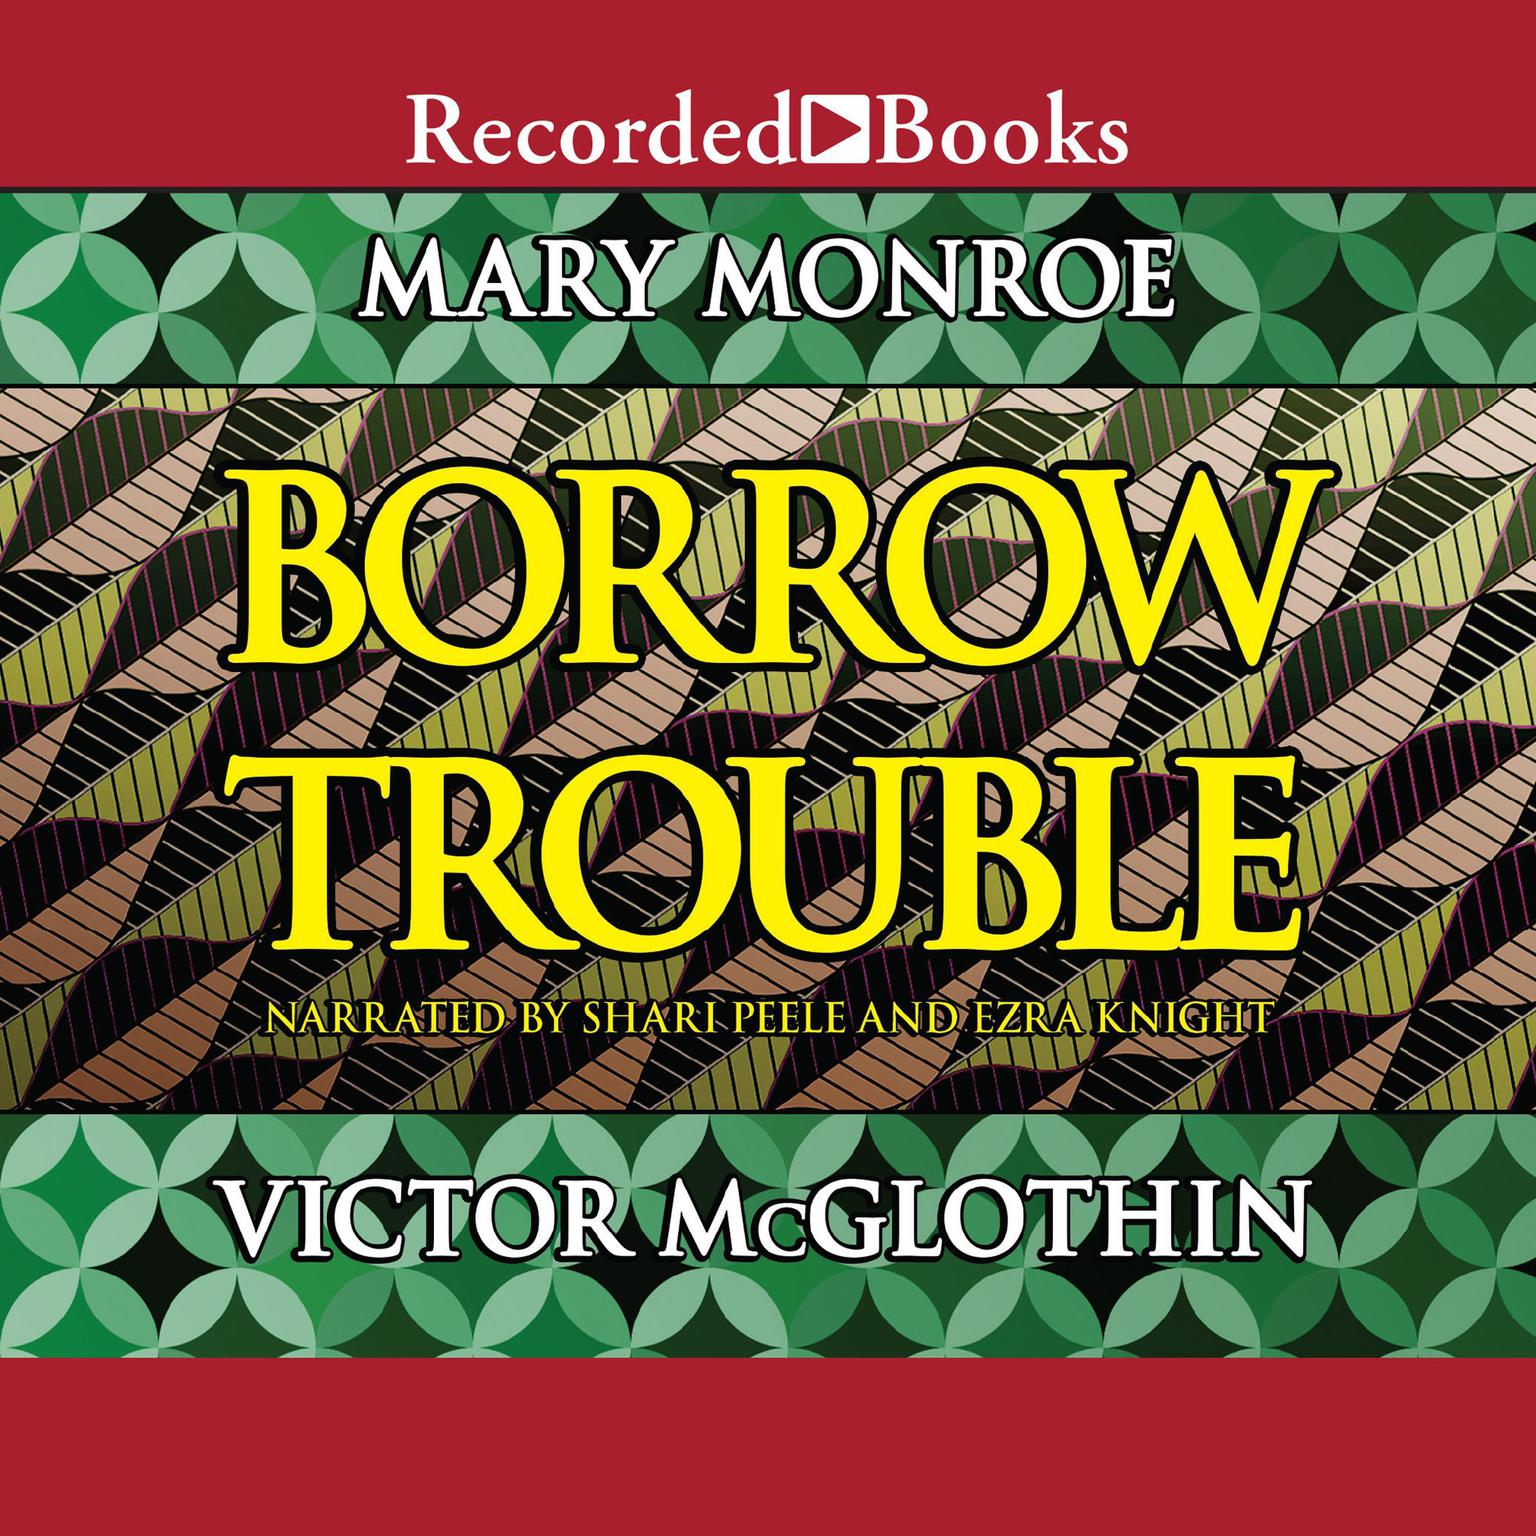 Borrow Trouble Audiobook, by Mary Monroe